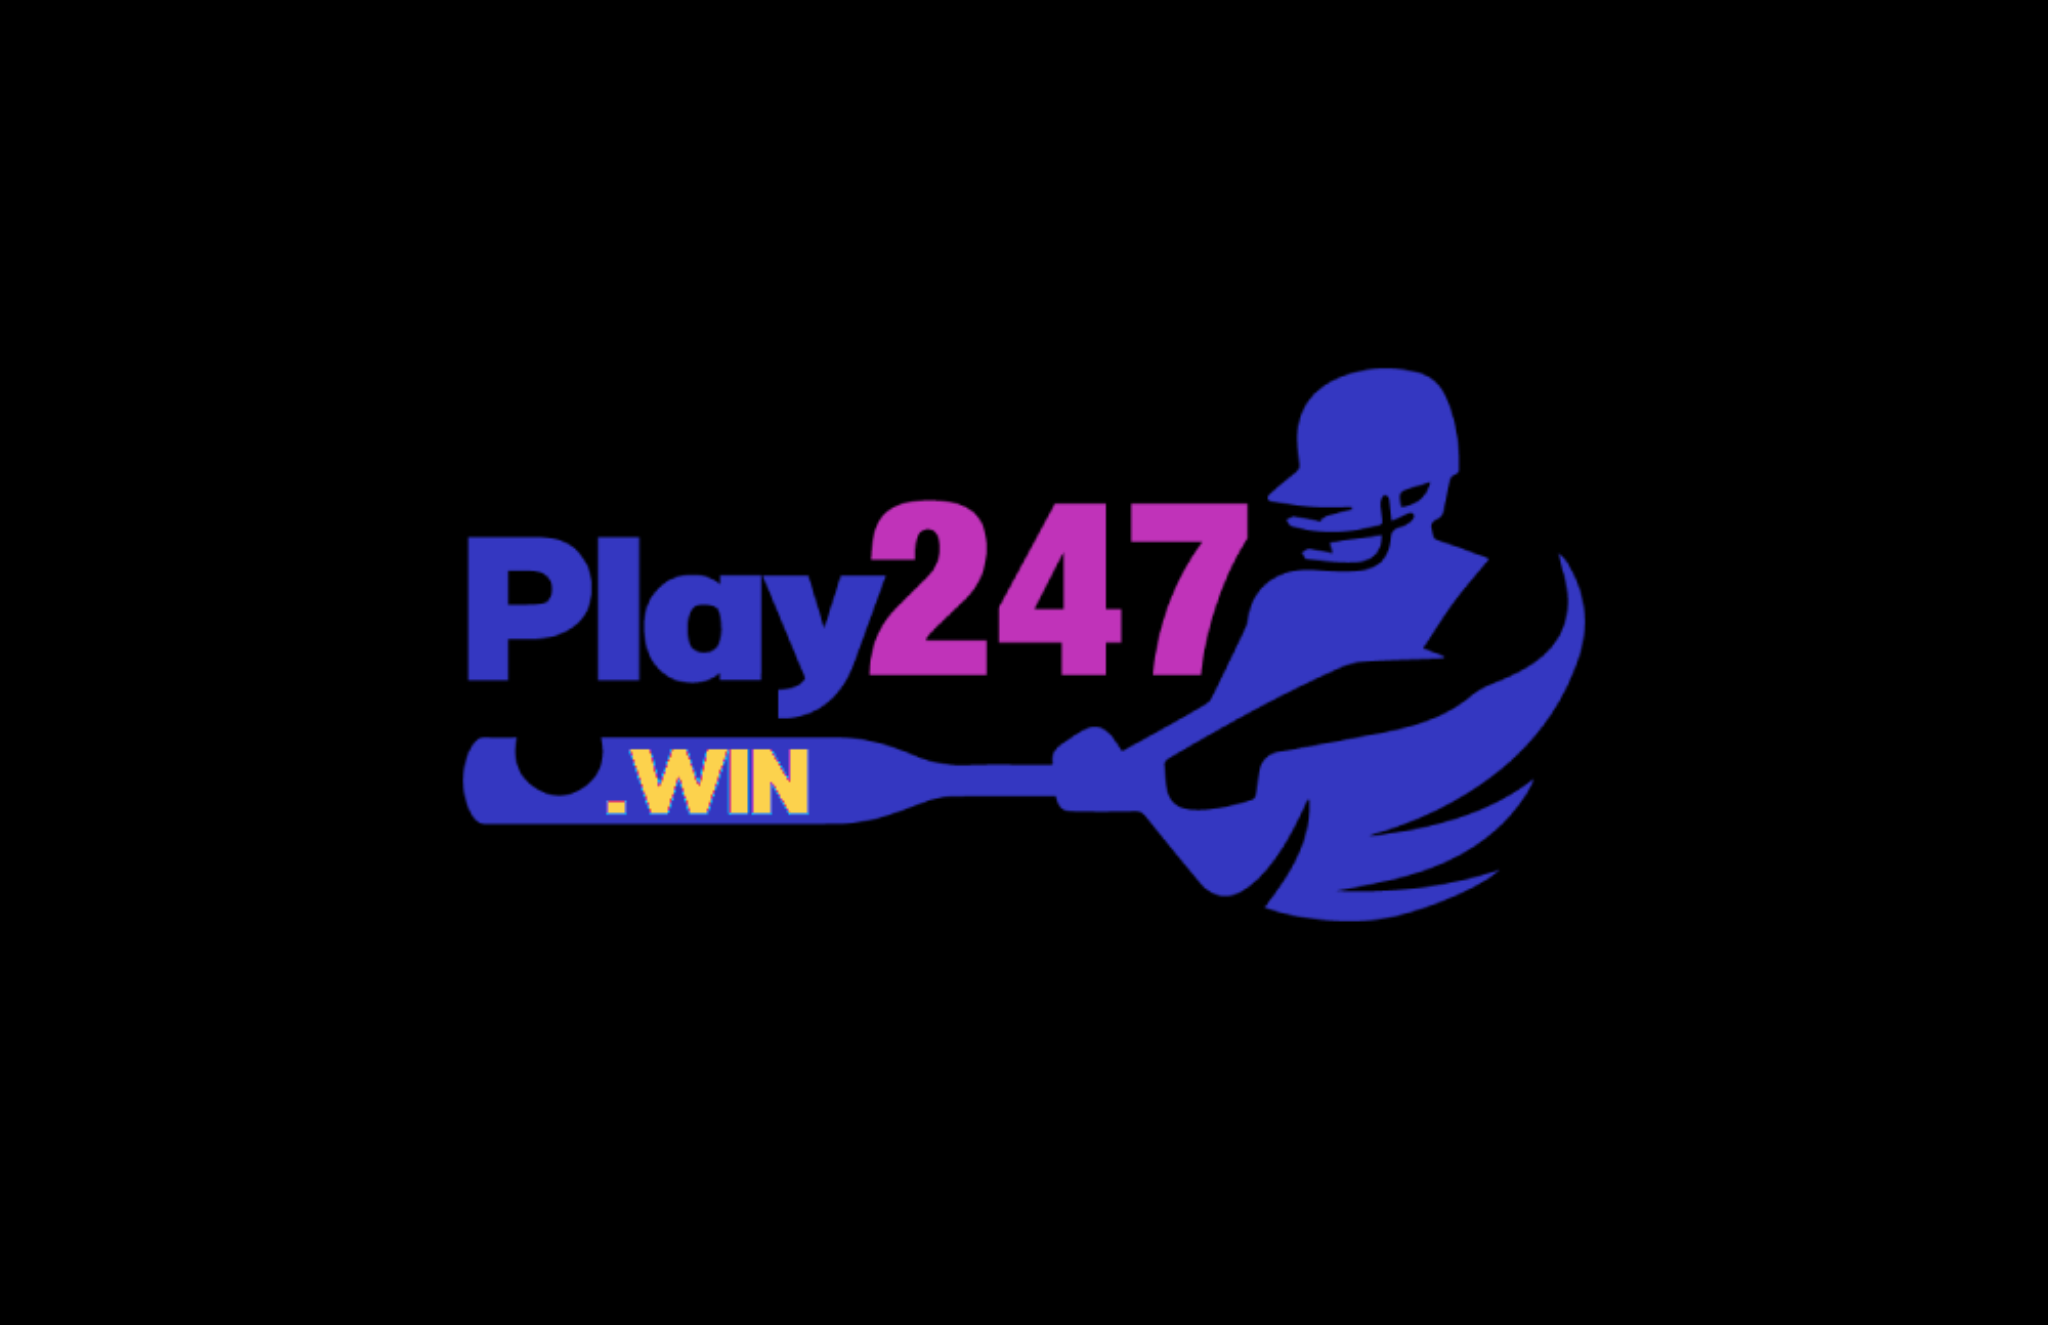 Play247